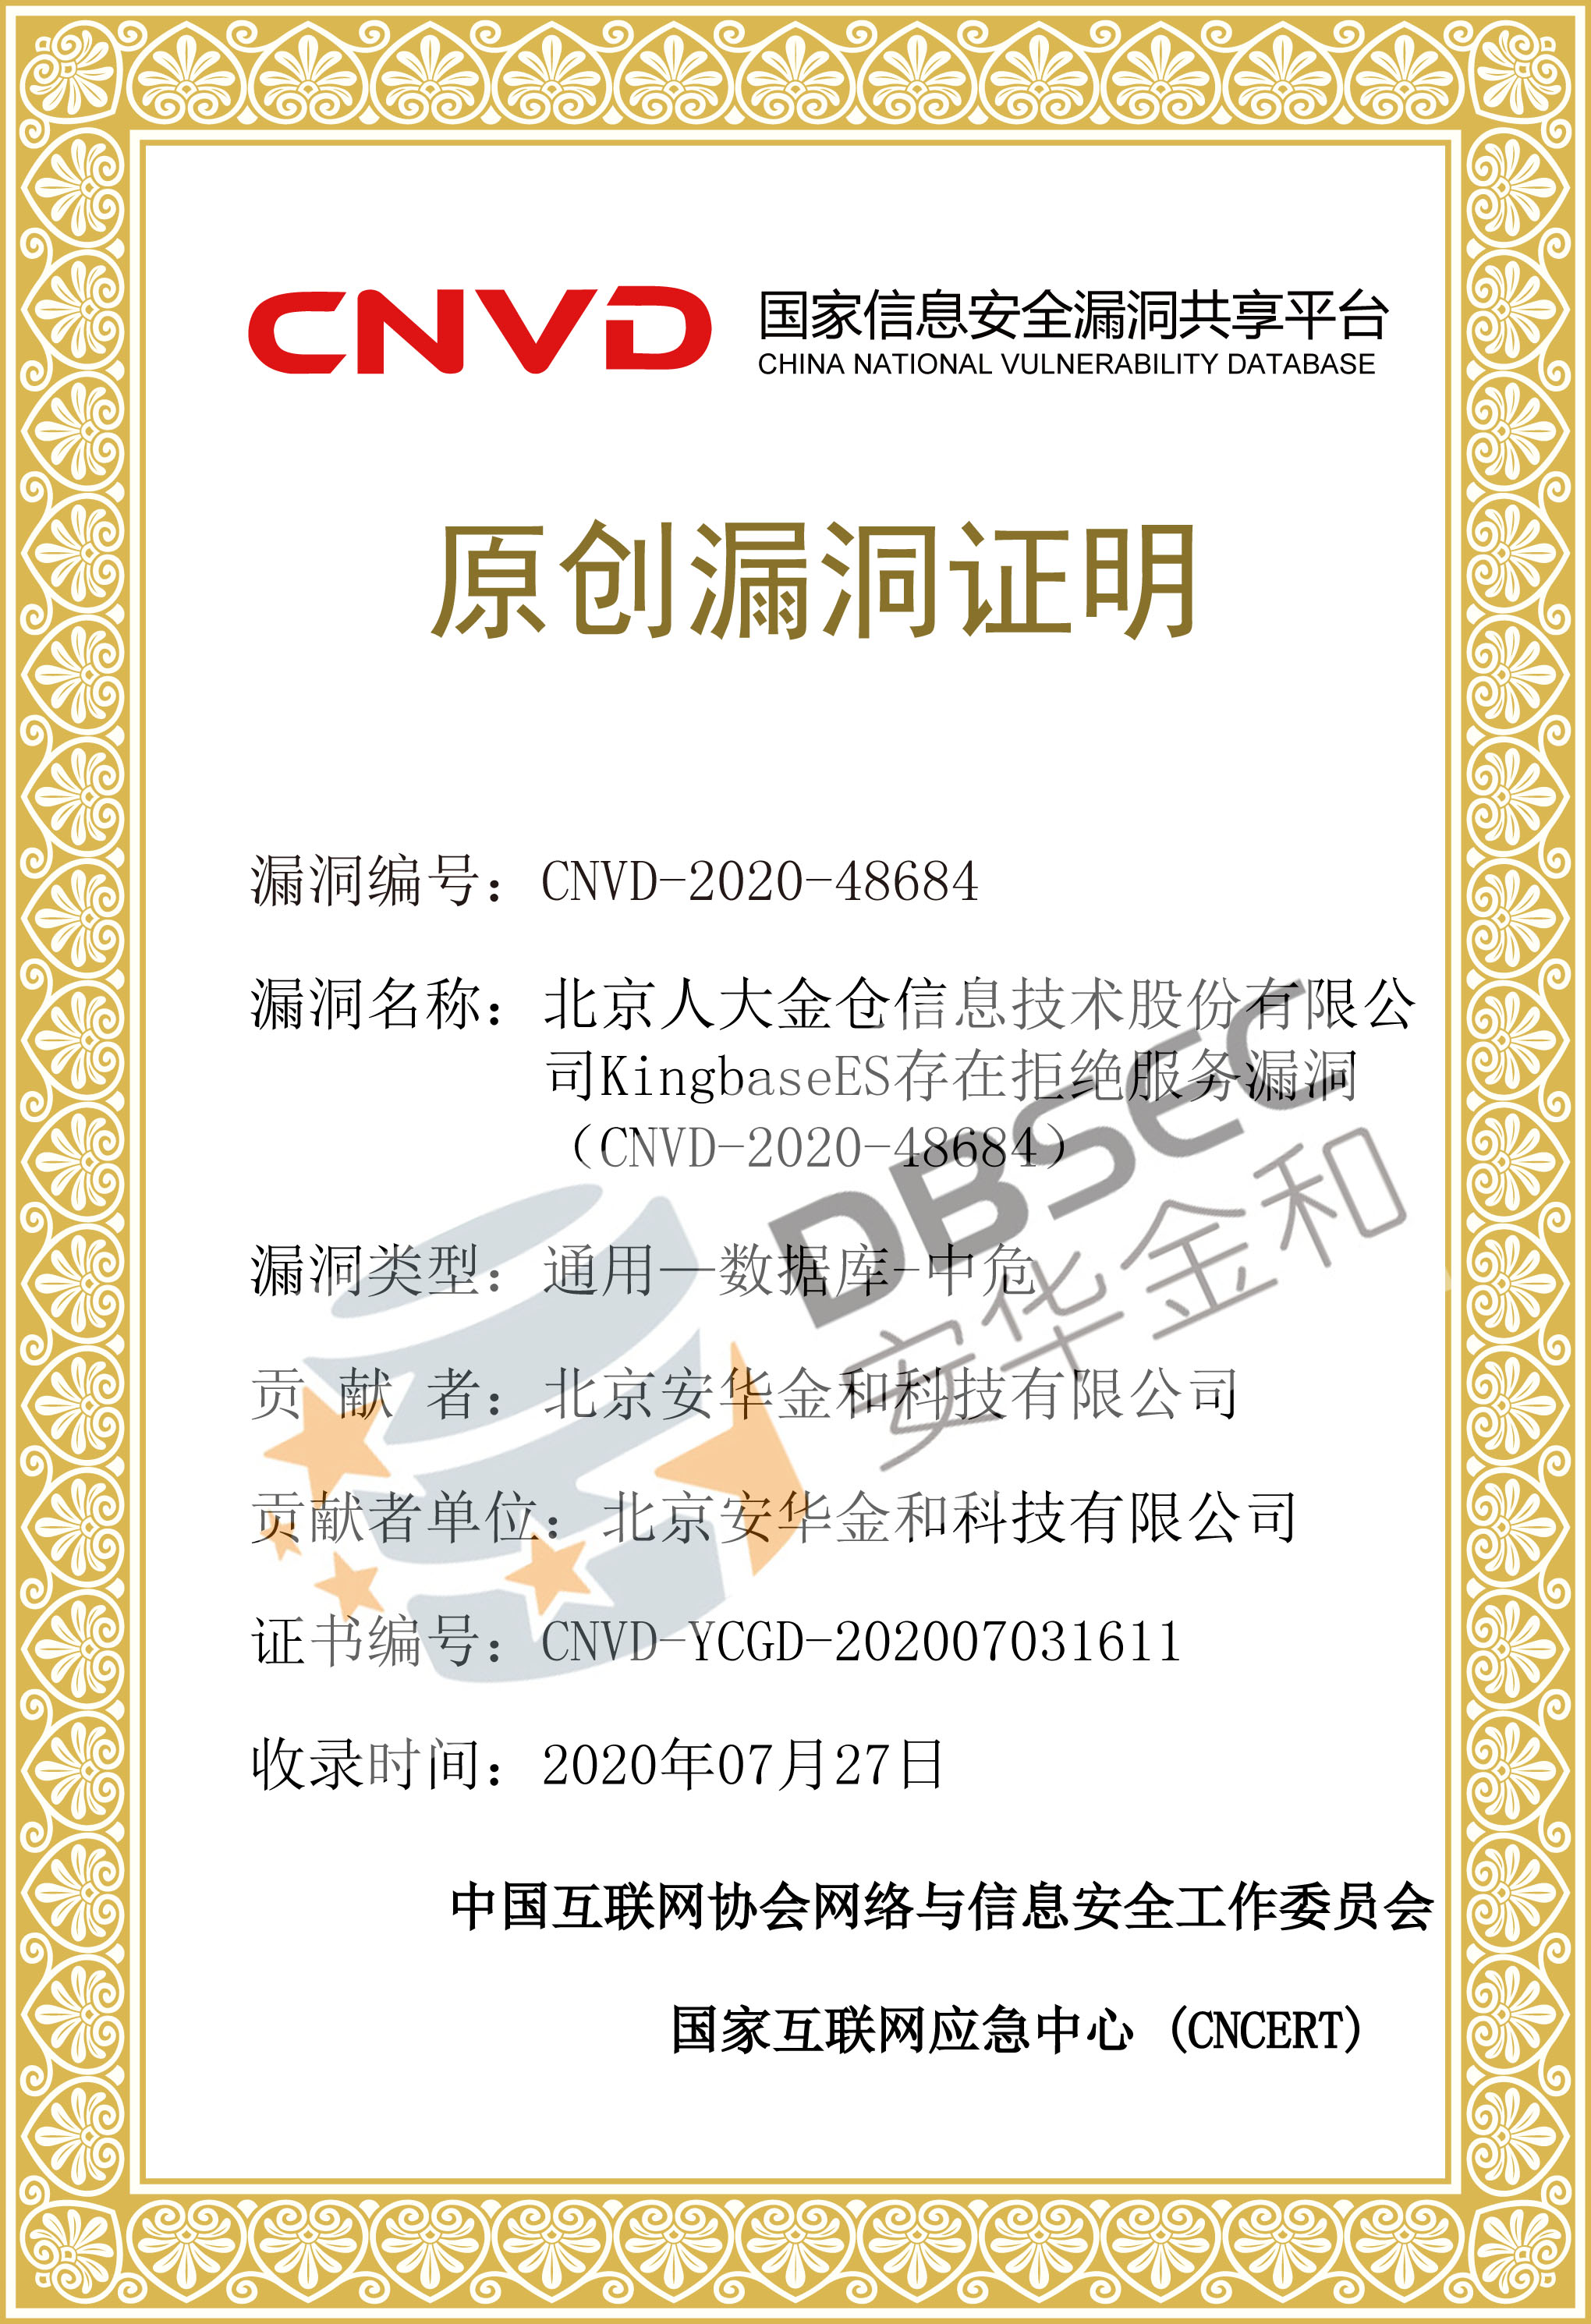 CNVD-YCGD-202007031611